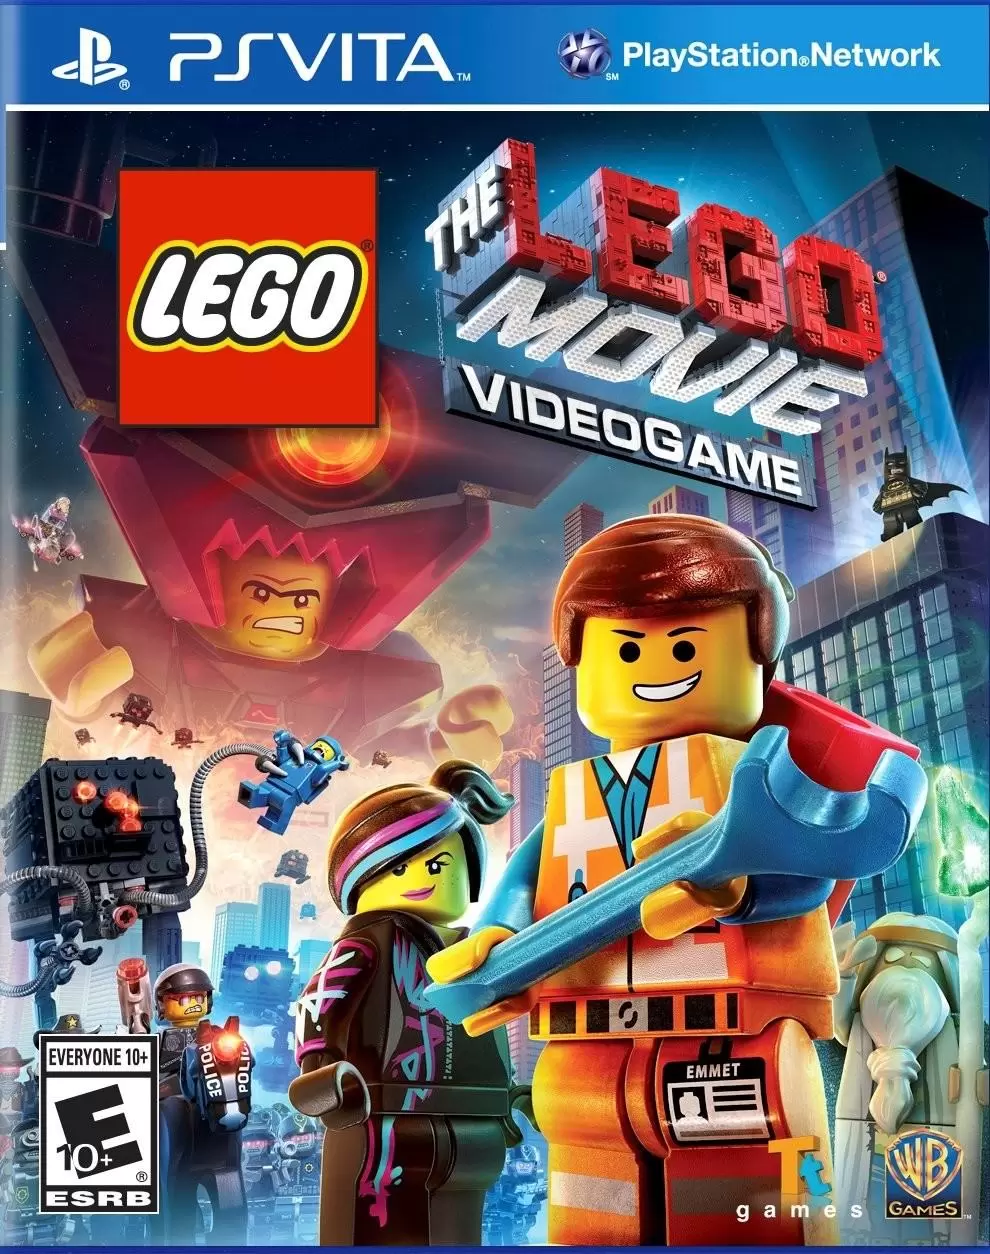 PS Vita Games - LEGO Movie Videogame